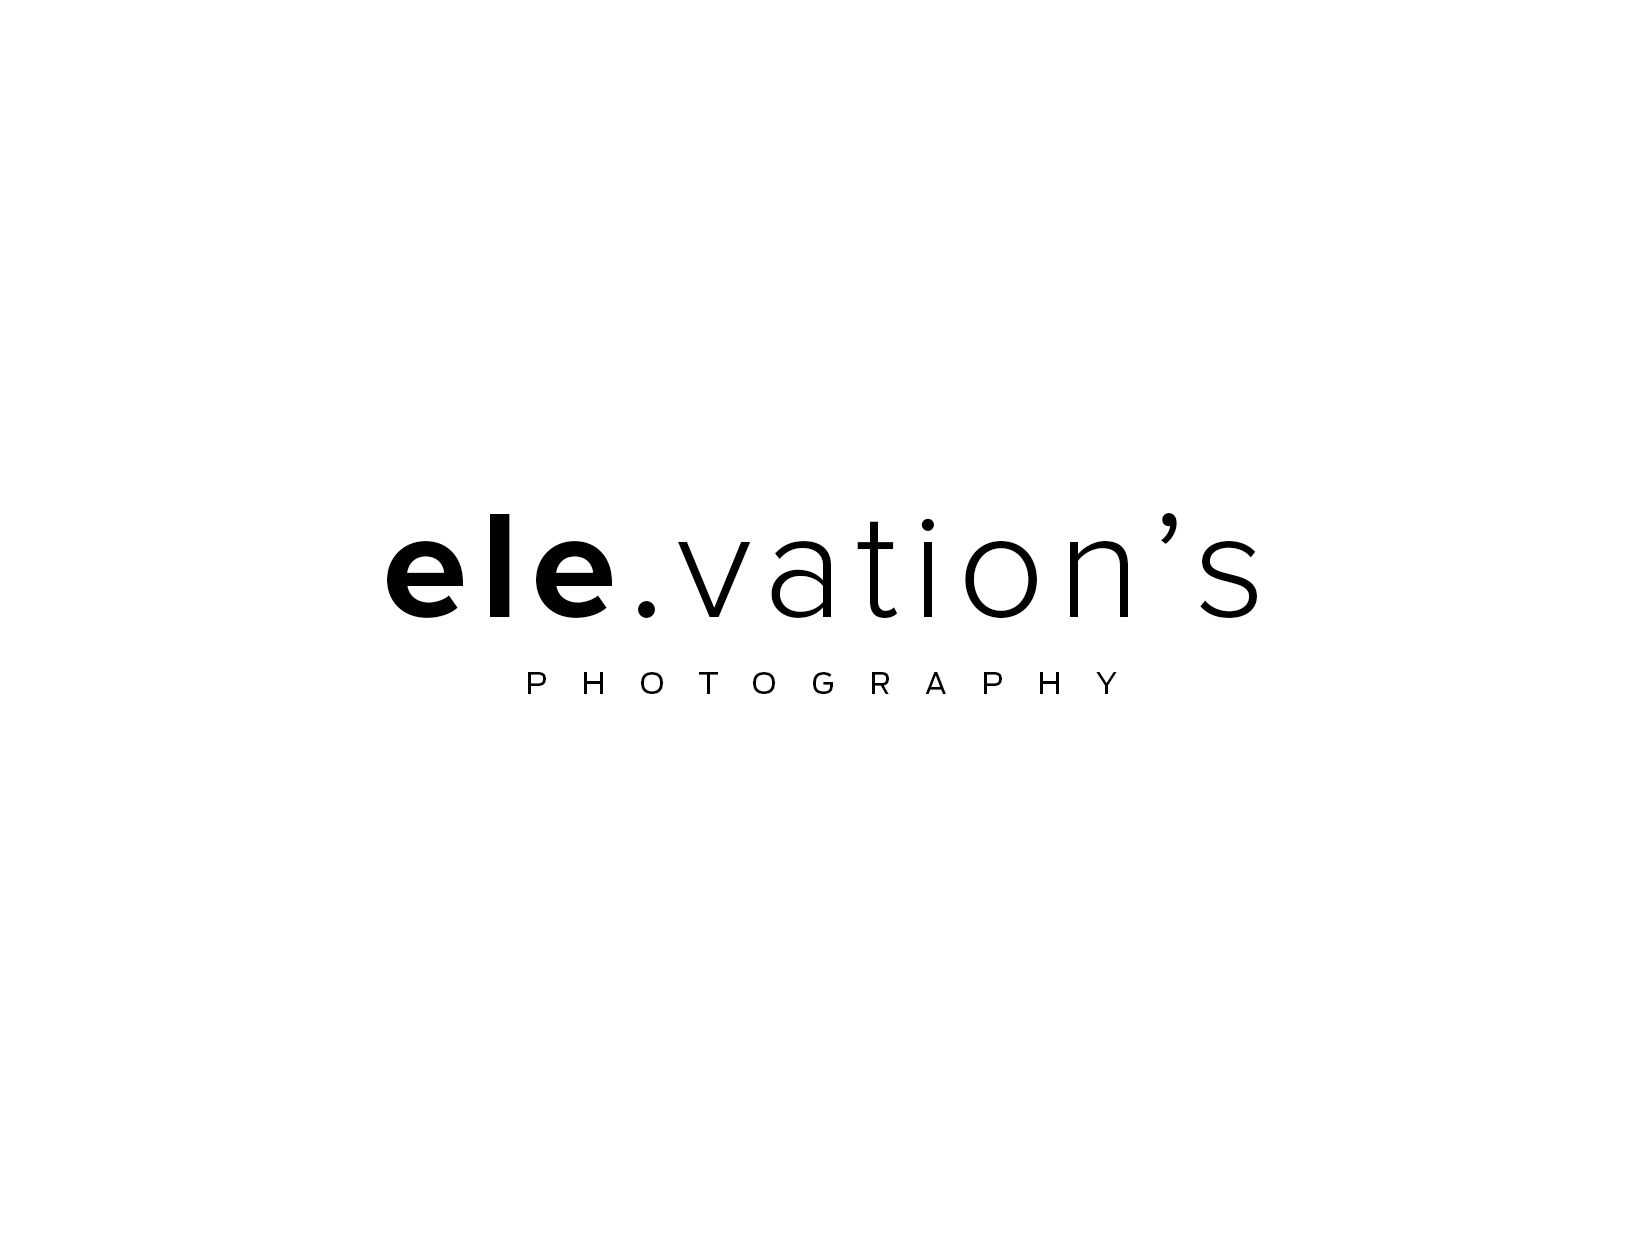 Elevation's Photography Logo